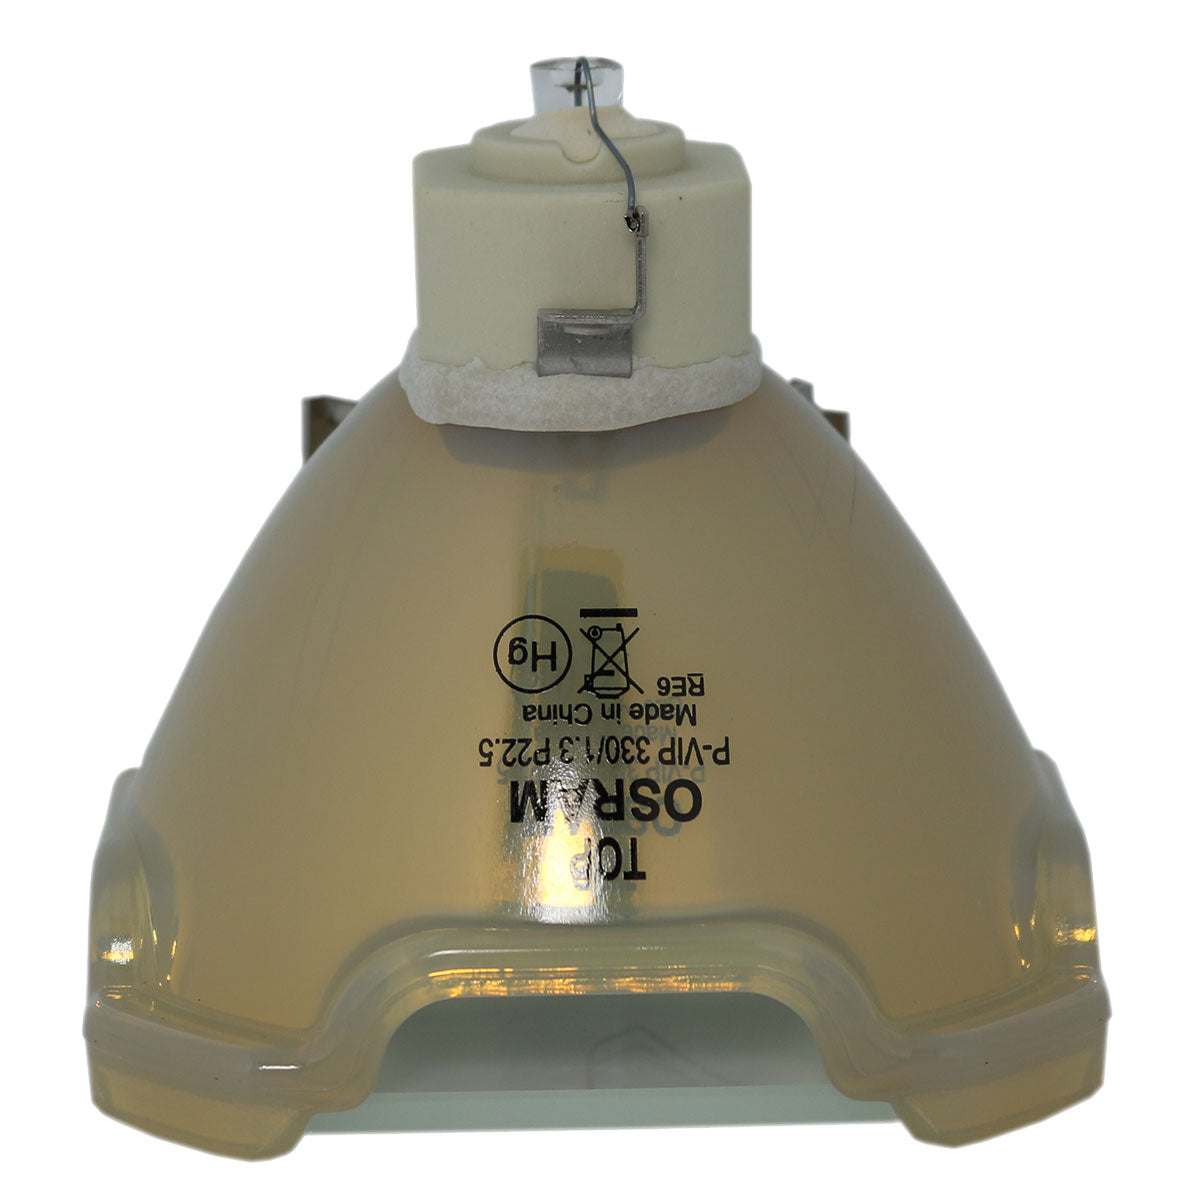 Eiki POA-LMP128 Osram Projector Bare Lamp